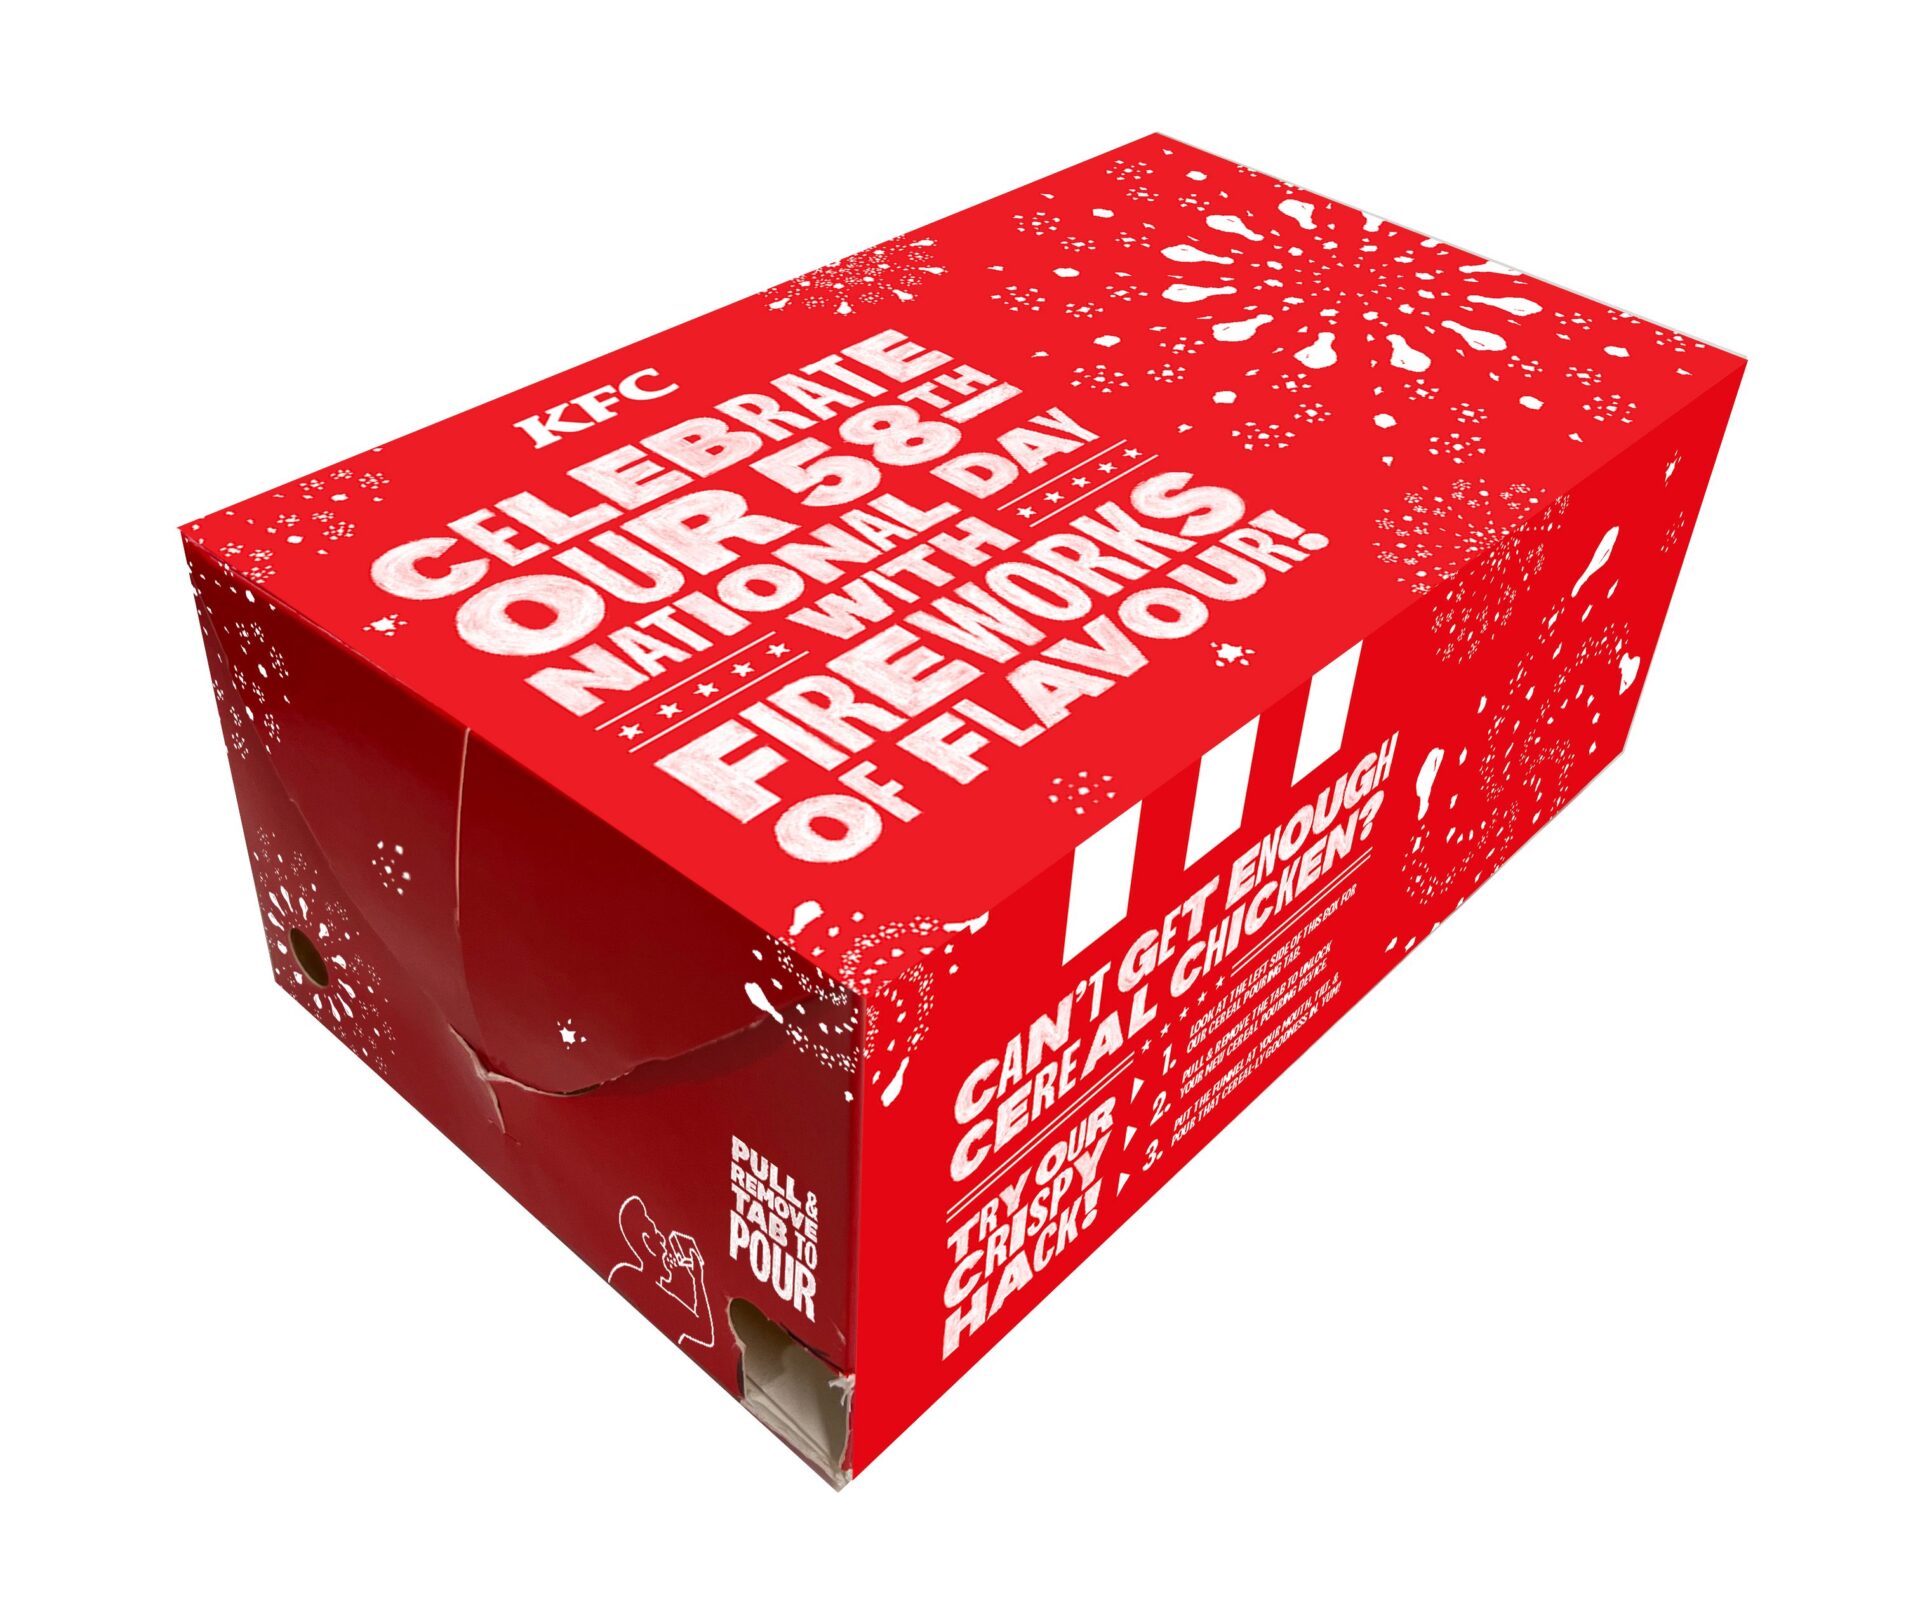 KFC Cereal Chicken — Box